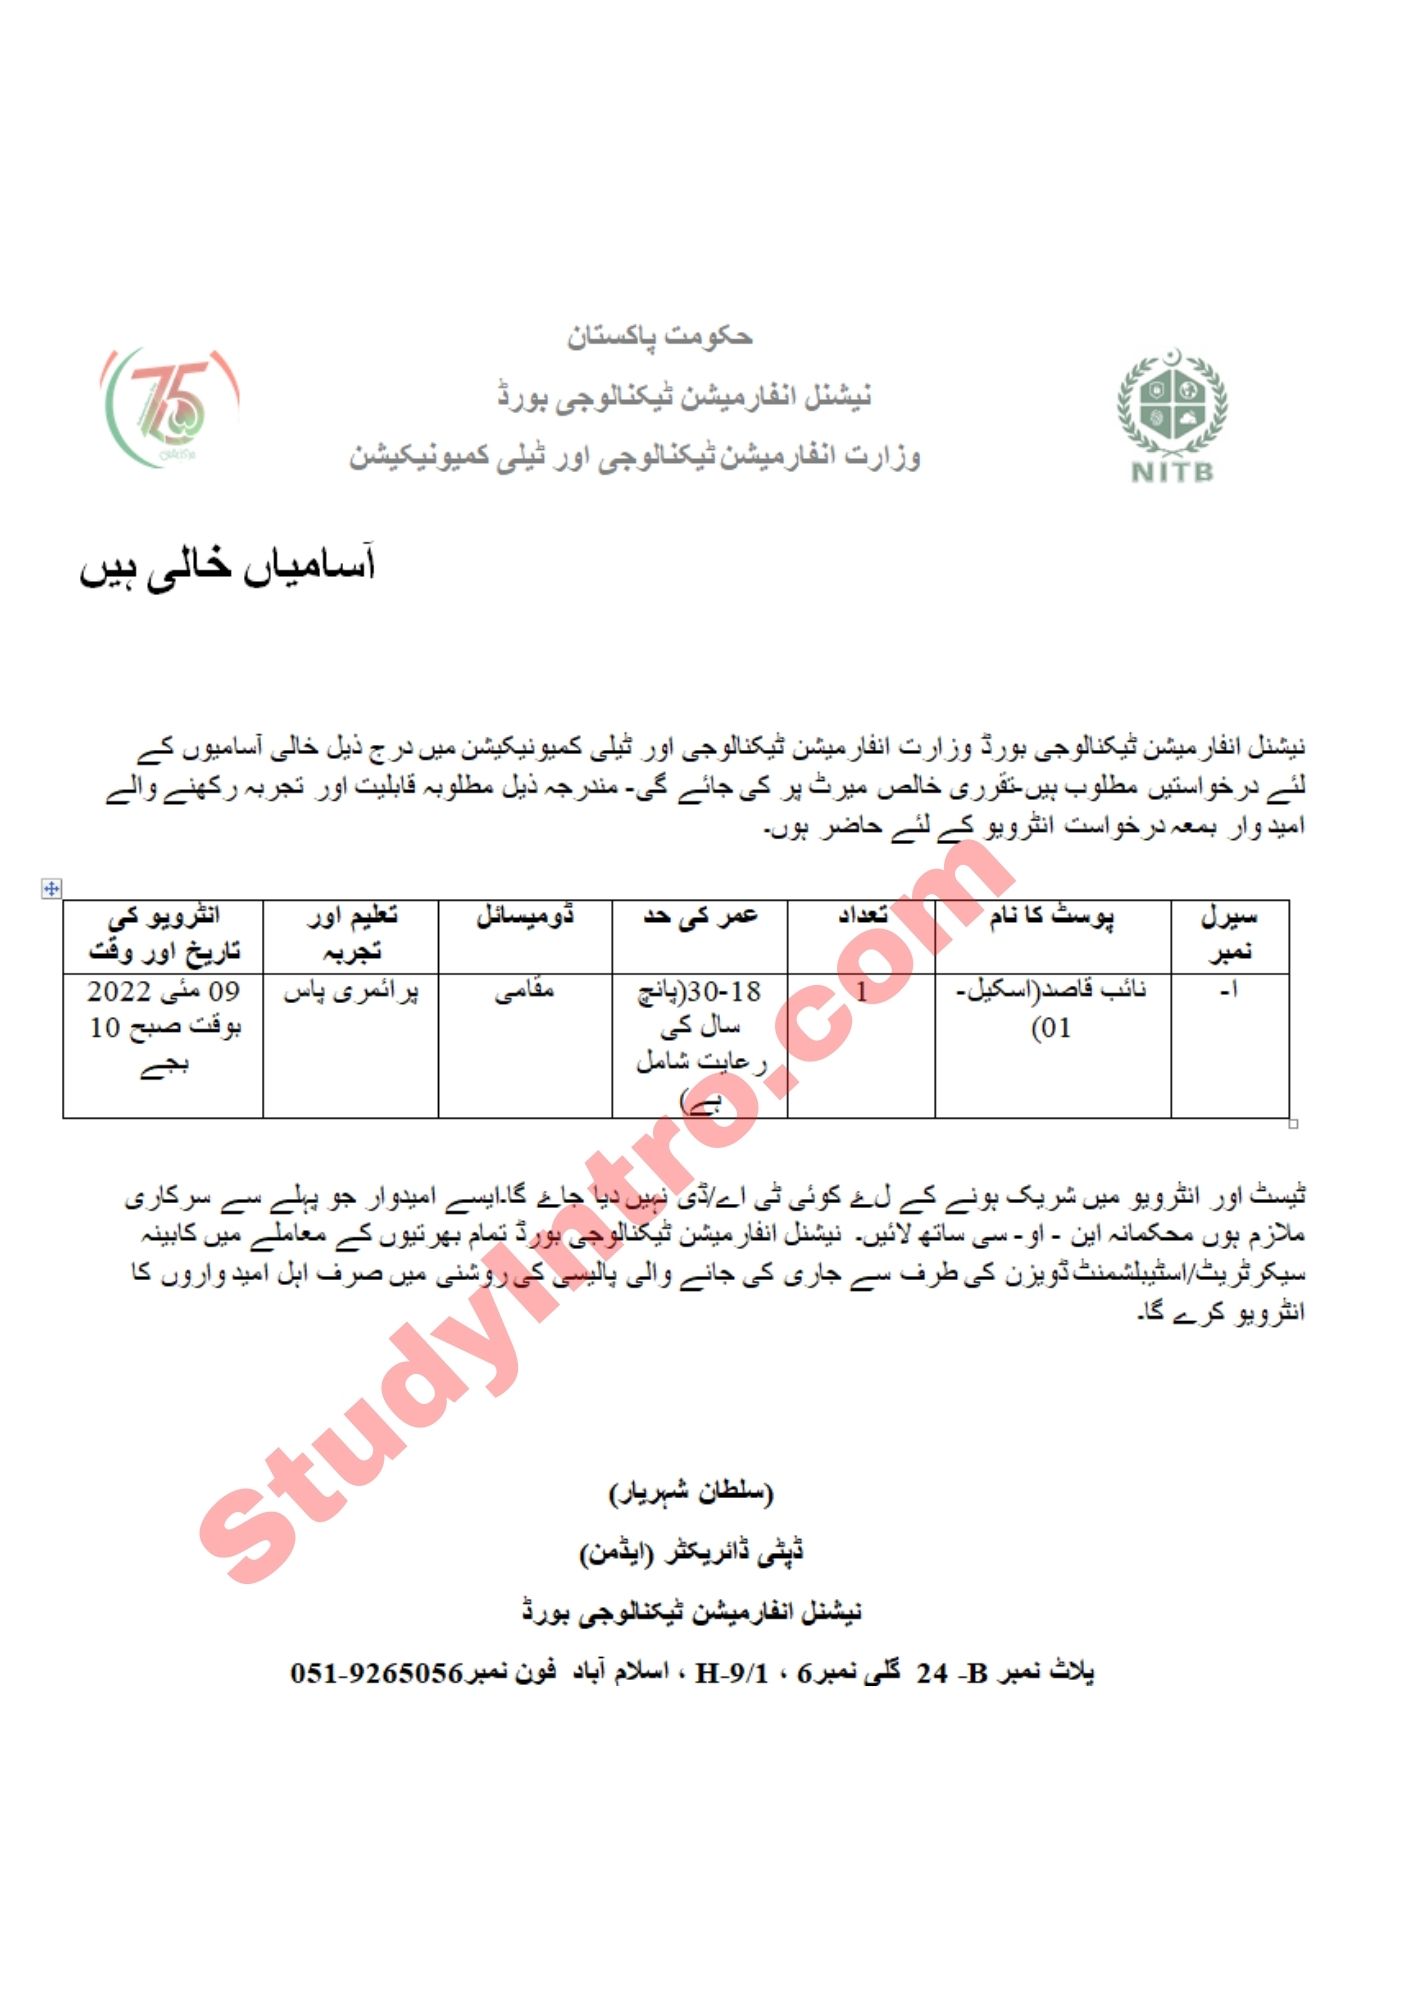 Naib Qasid Jobs in NITB 2022-Apply Now